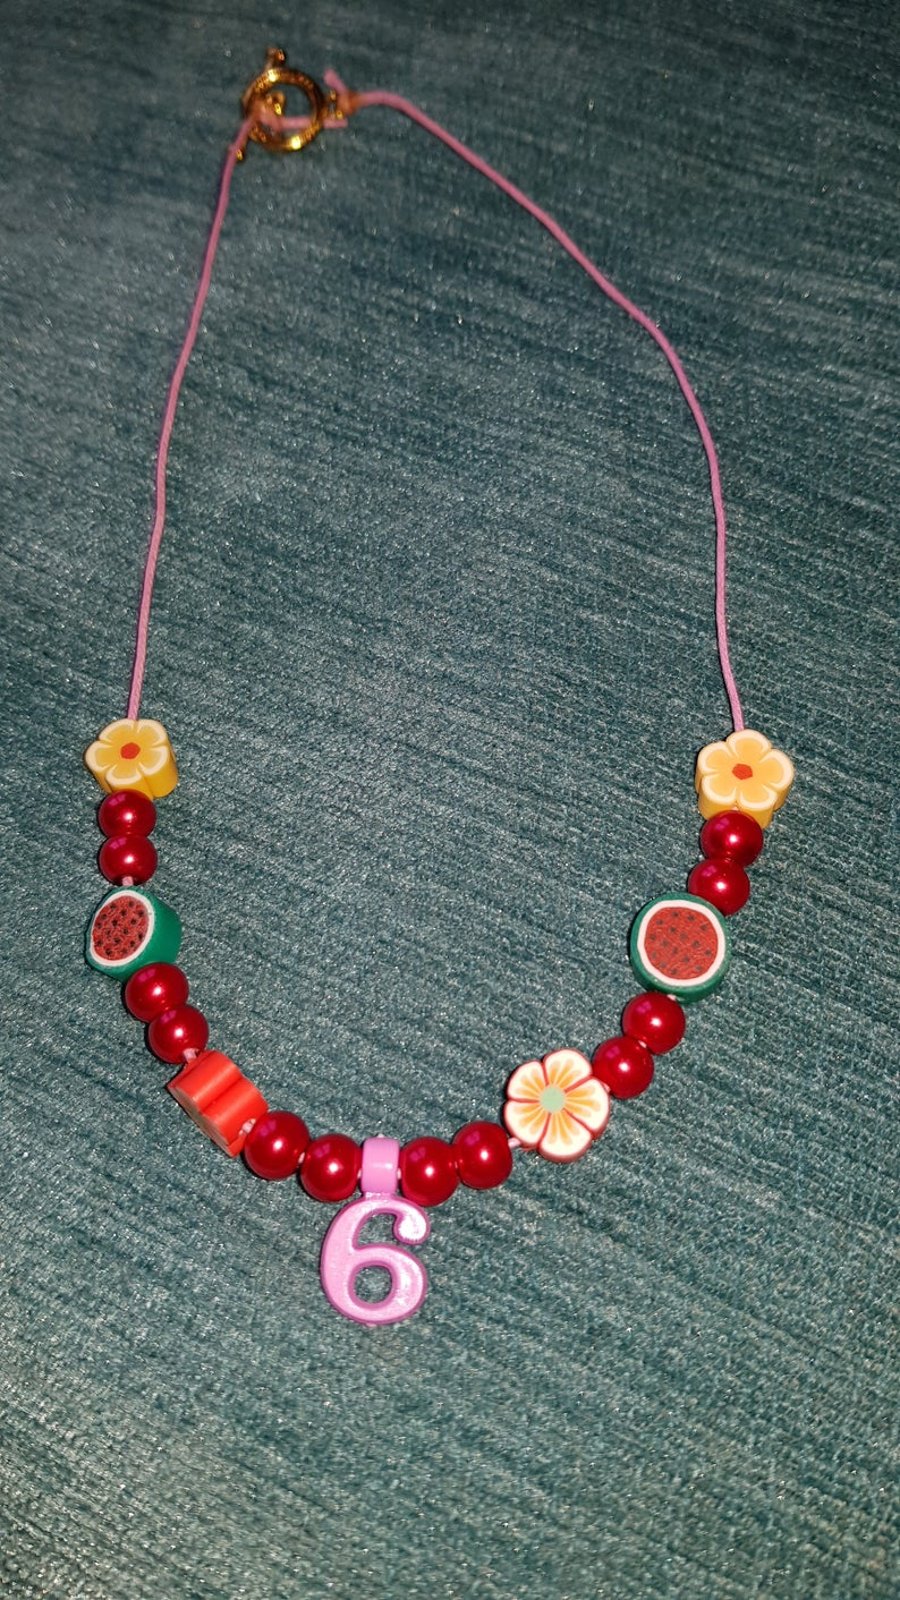 Children's '6' Charm Necklace